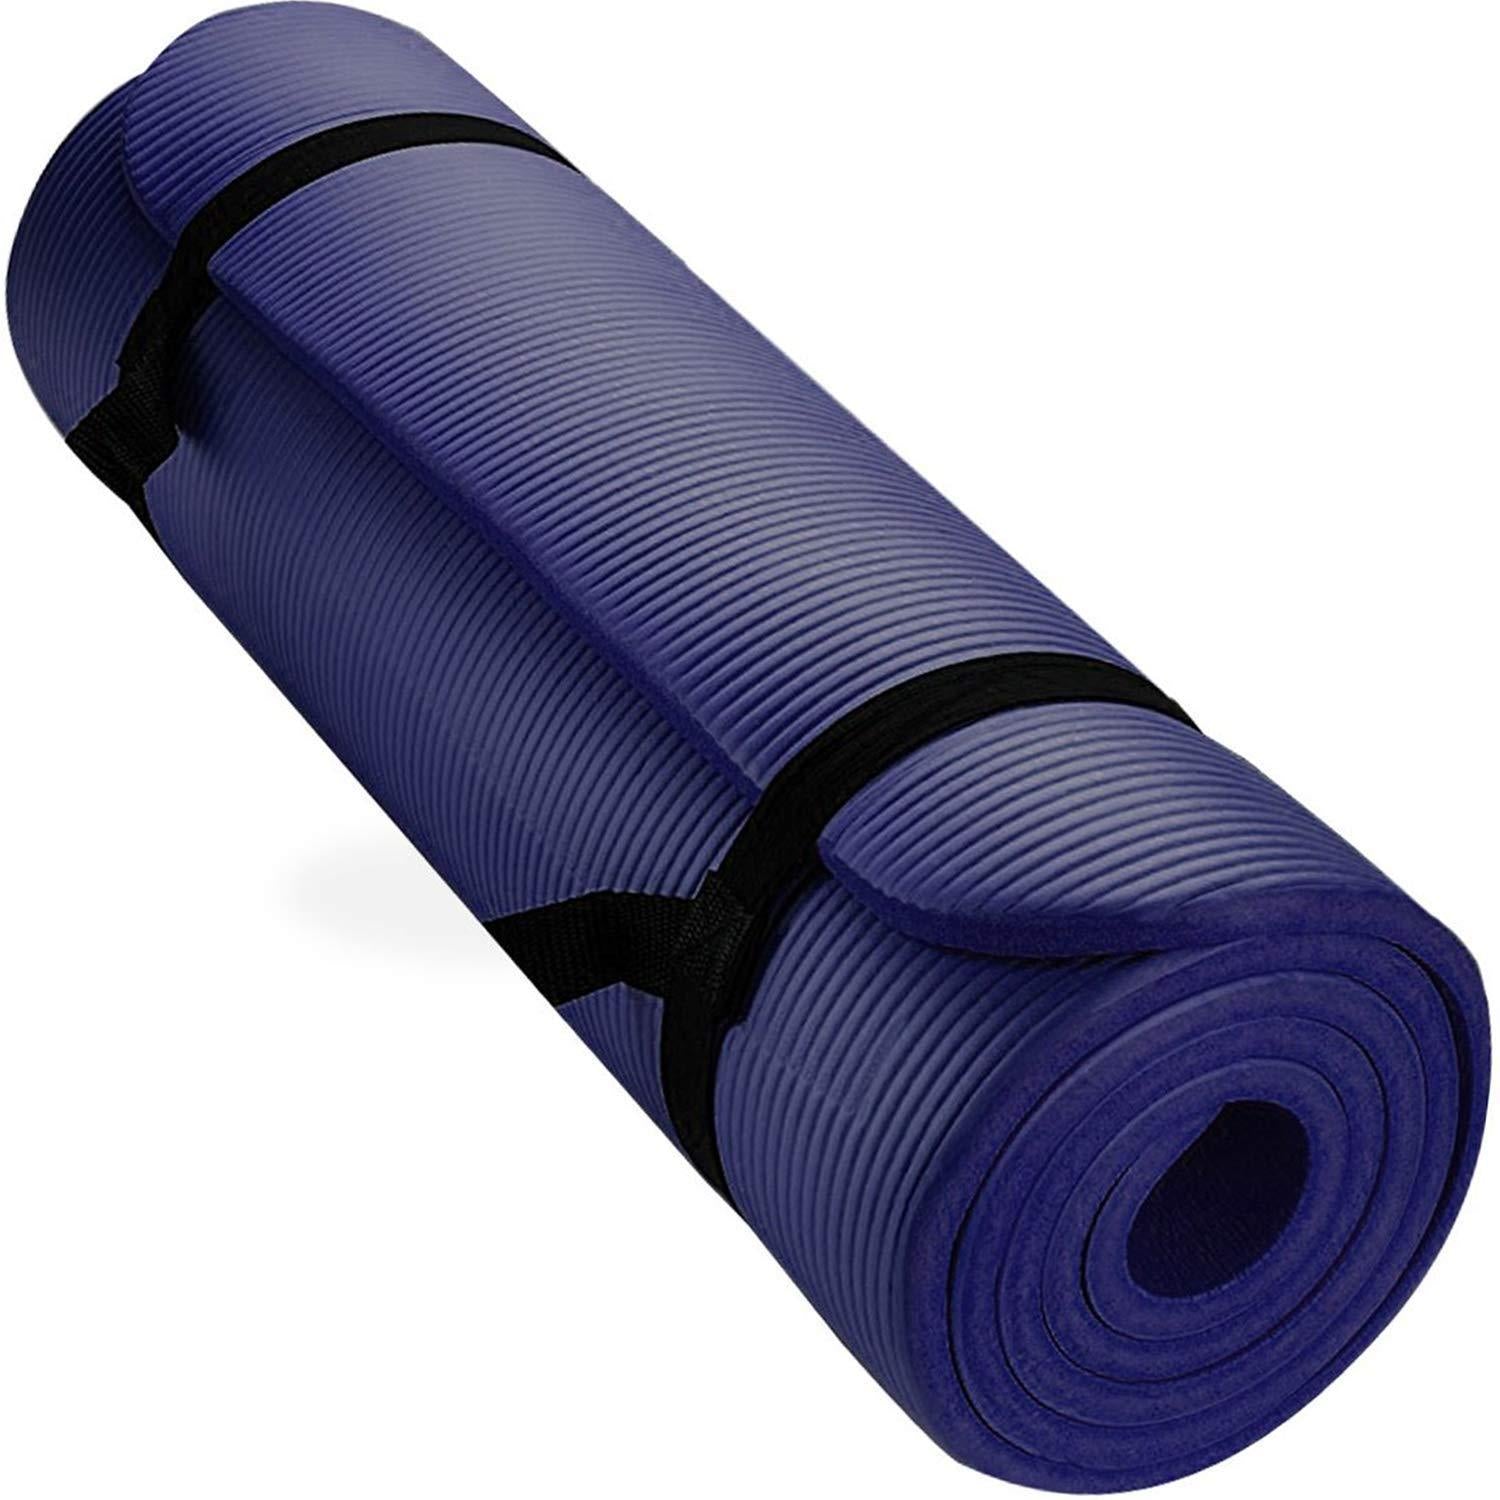 Yoga Workout Mat, 1/2-Inch Extra Thick Yoga Foam Mat – Aduro Sport